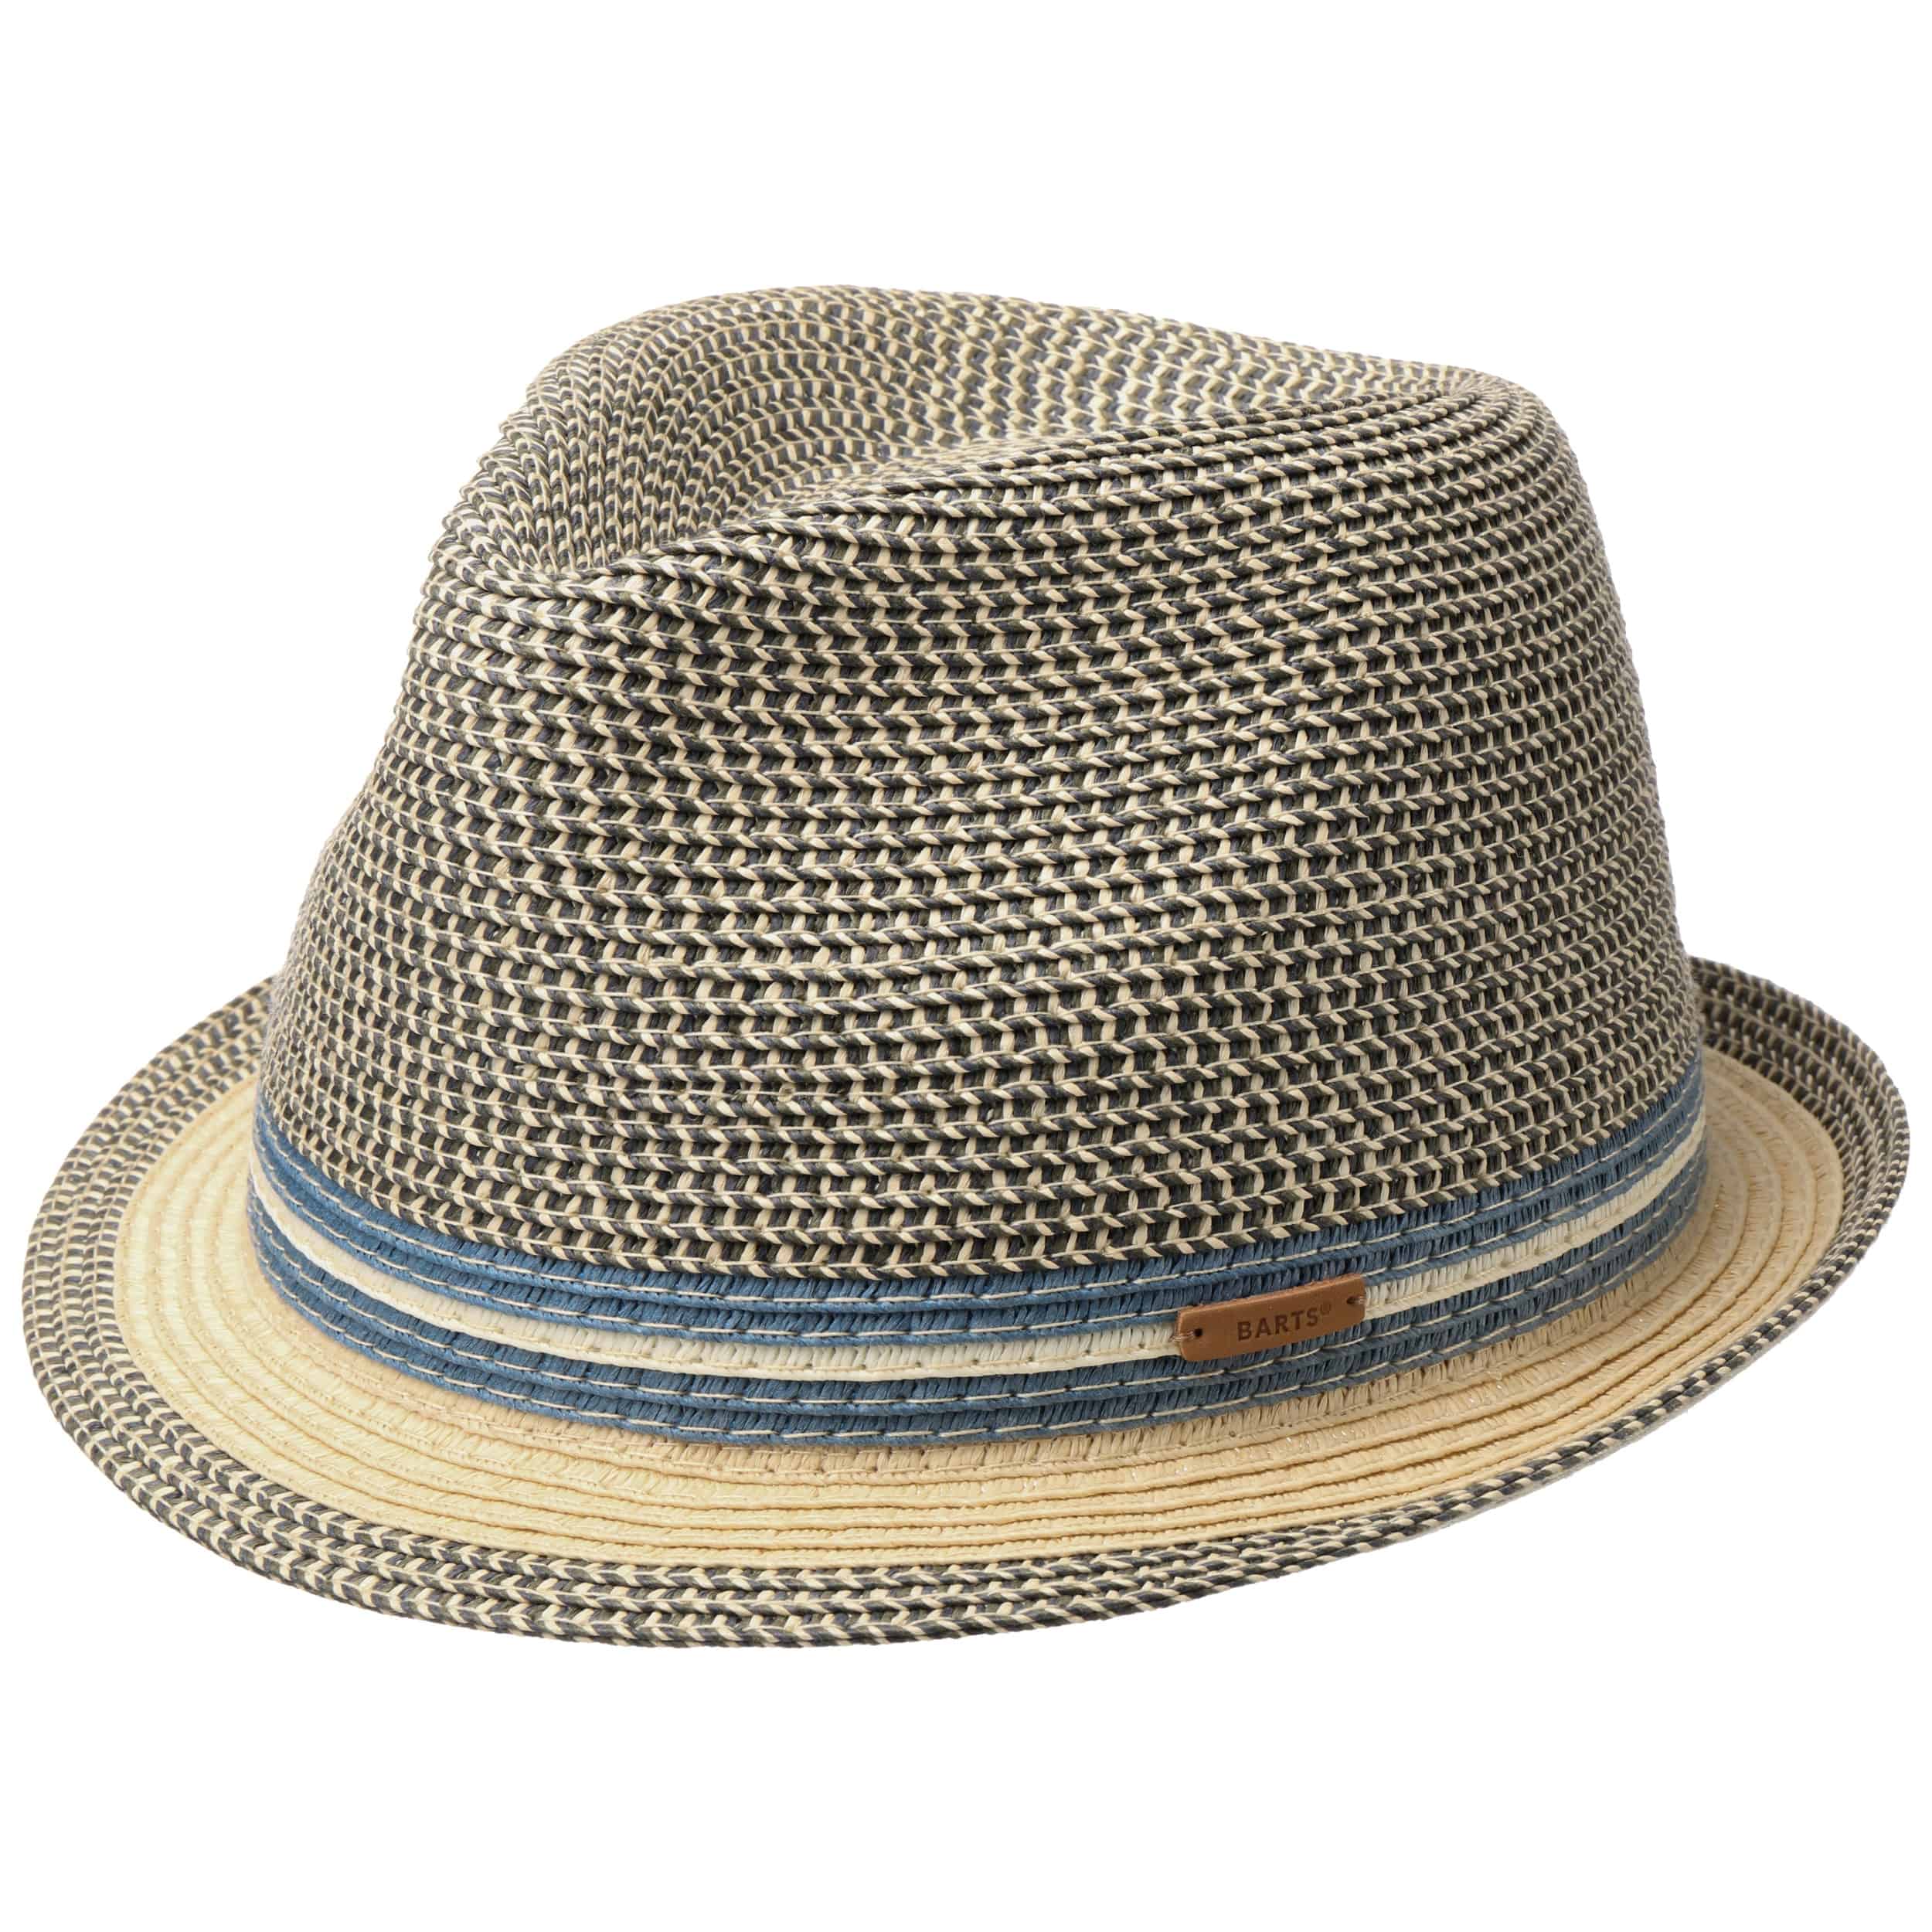 Fluoriet Trilby Hat by Barts - 37,95 €